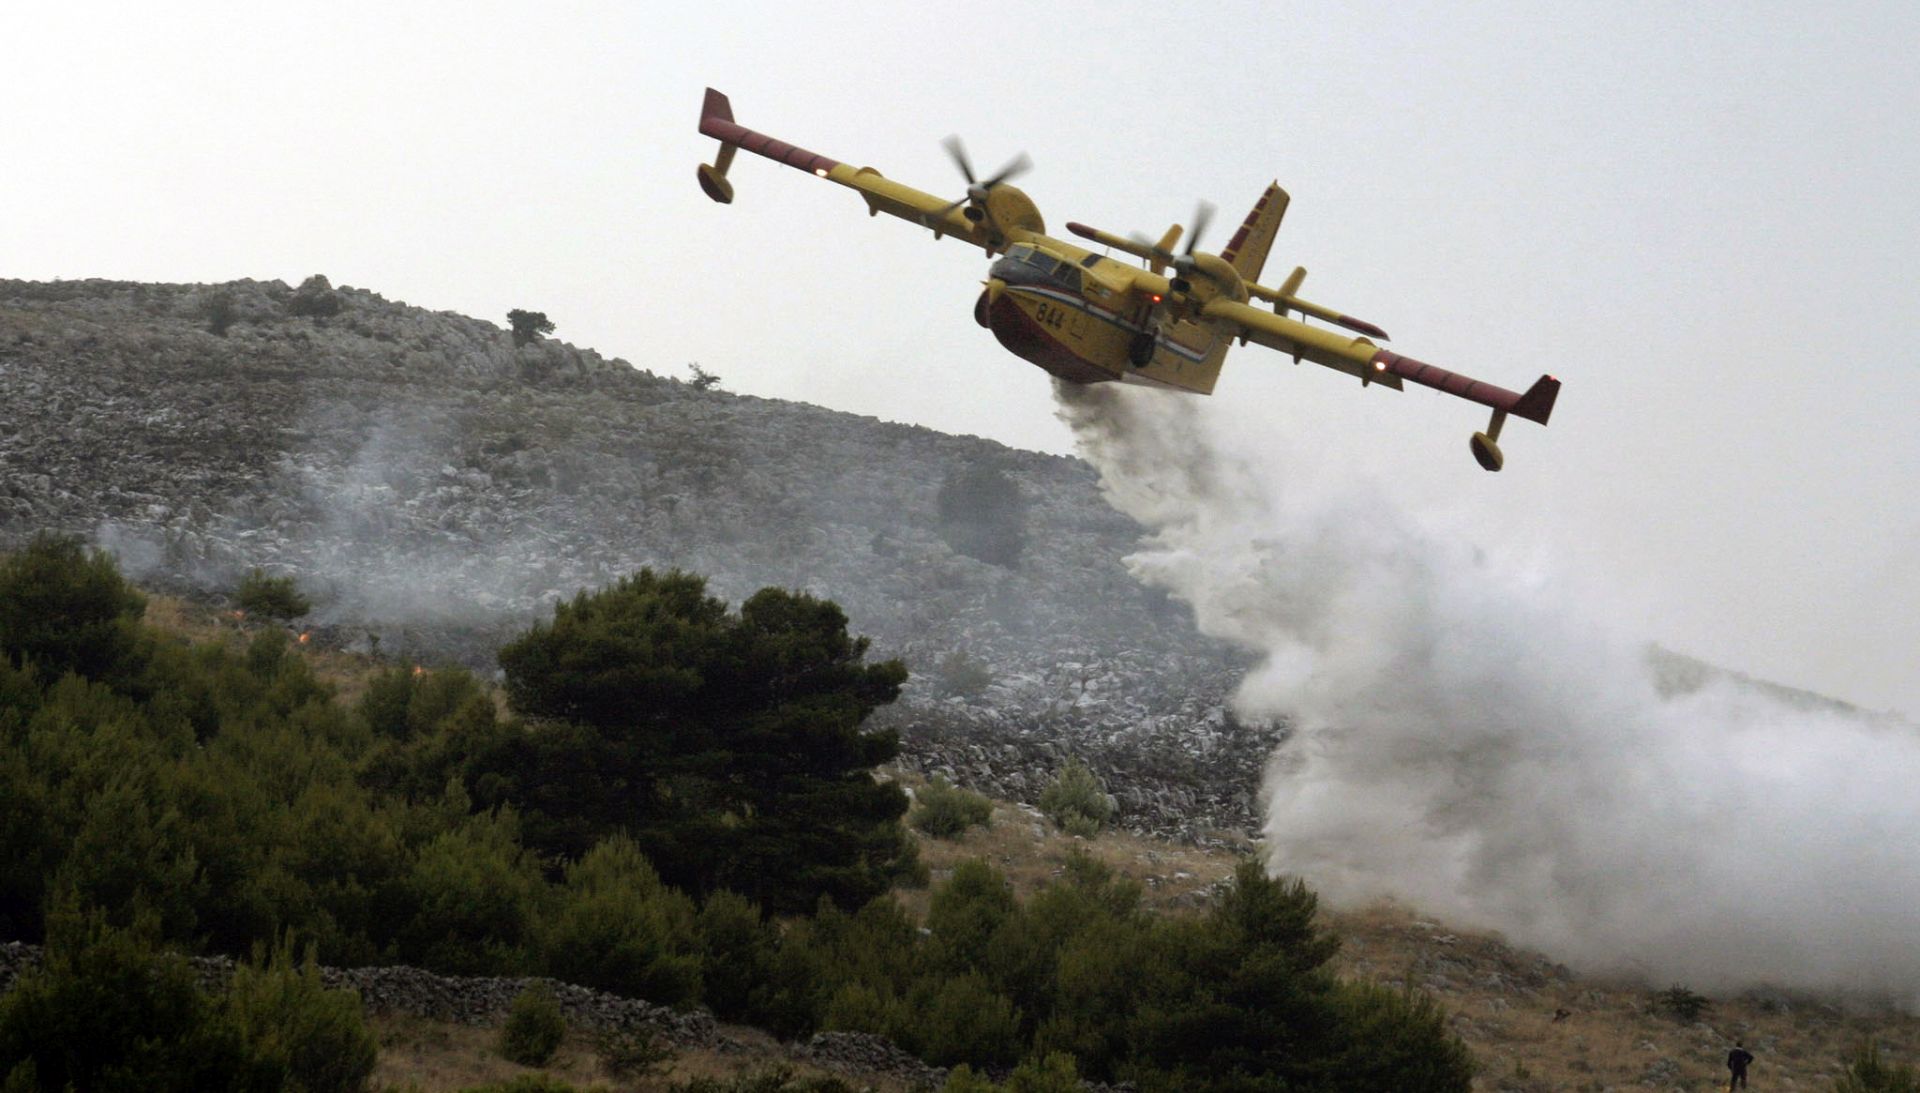 MORH Kanader na požarištu kod Solina, airtractor sanirao požar u Lećevici